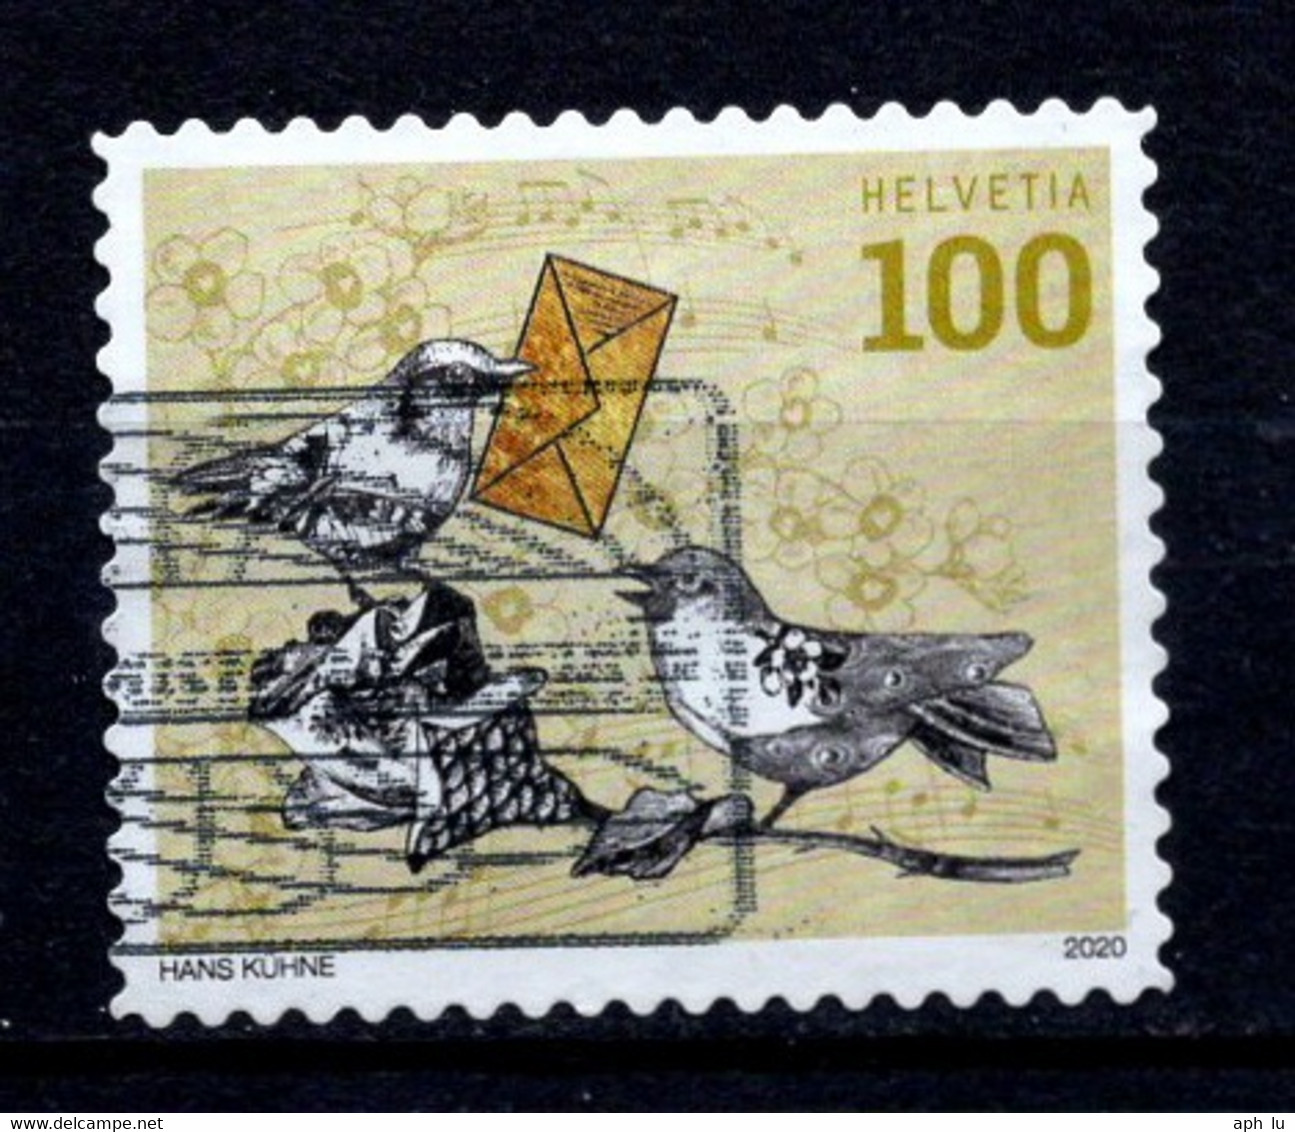 Marke Aus Dem Jahre 2020 (b410802) - Used Stamps